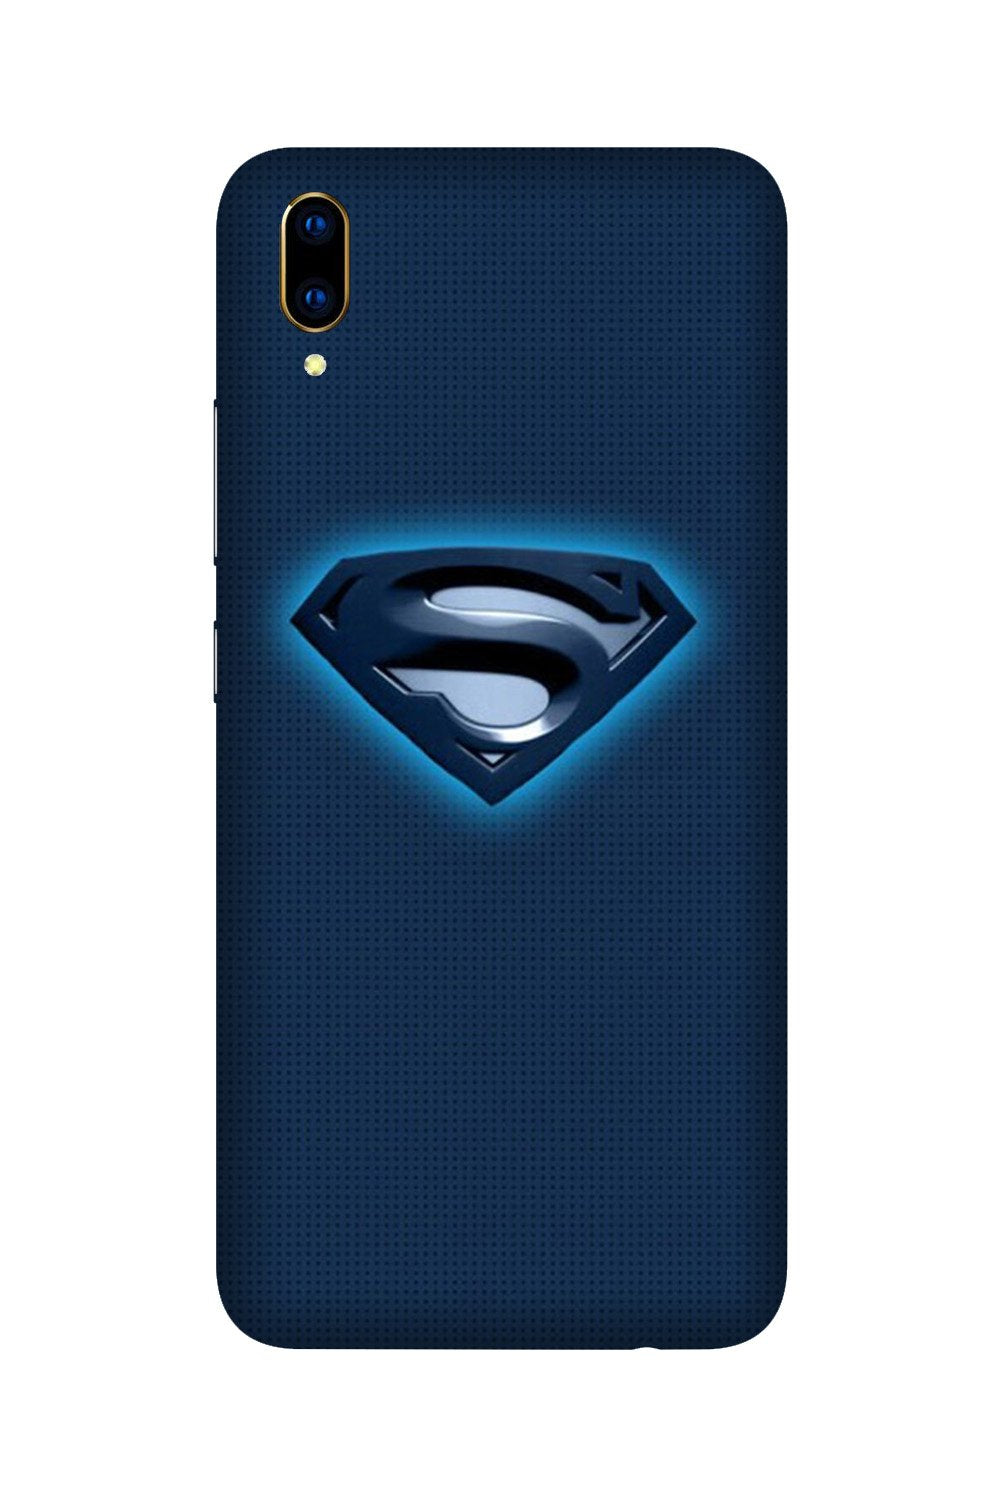 Superman Superhero Case for Vivo Nex(Design - 117)